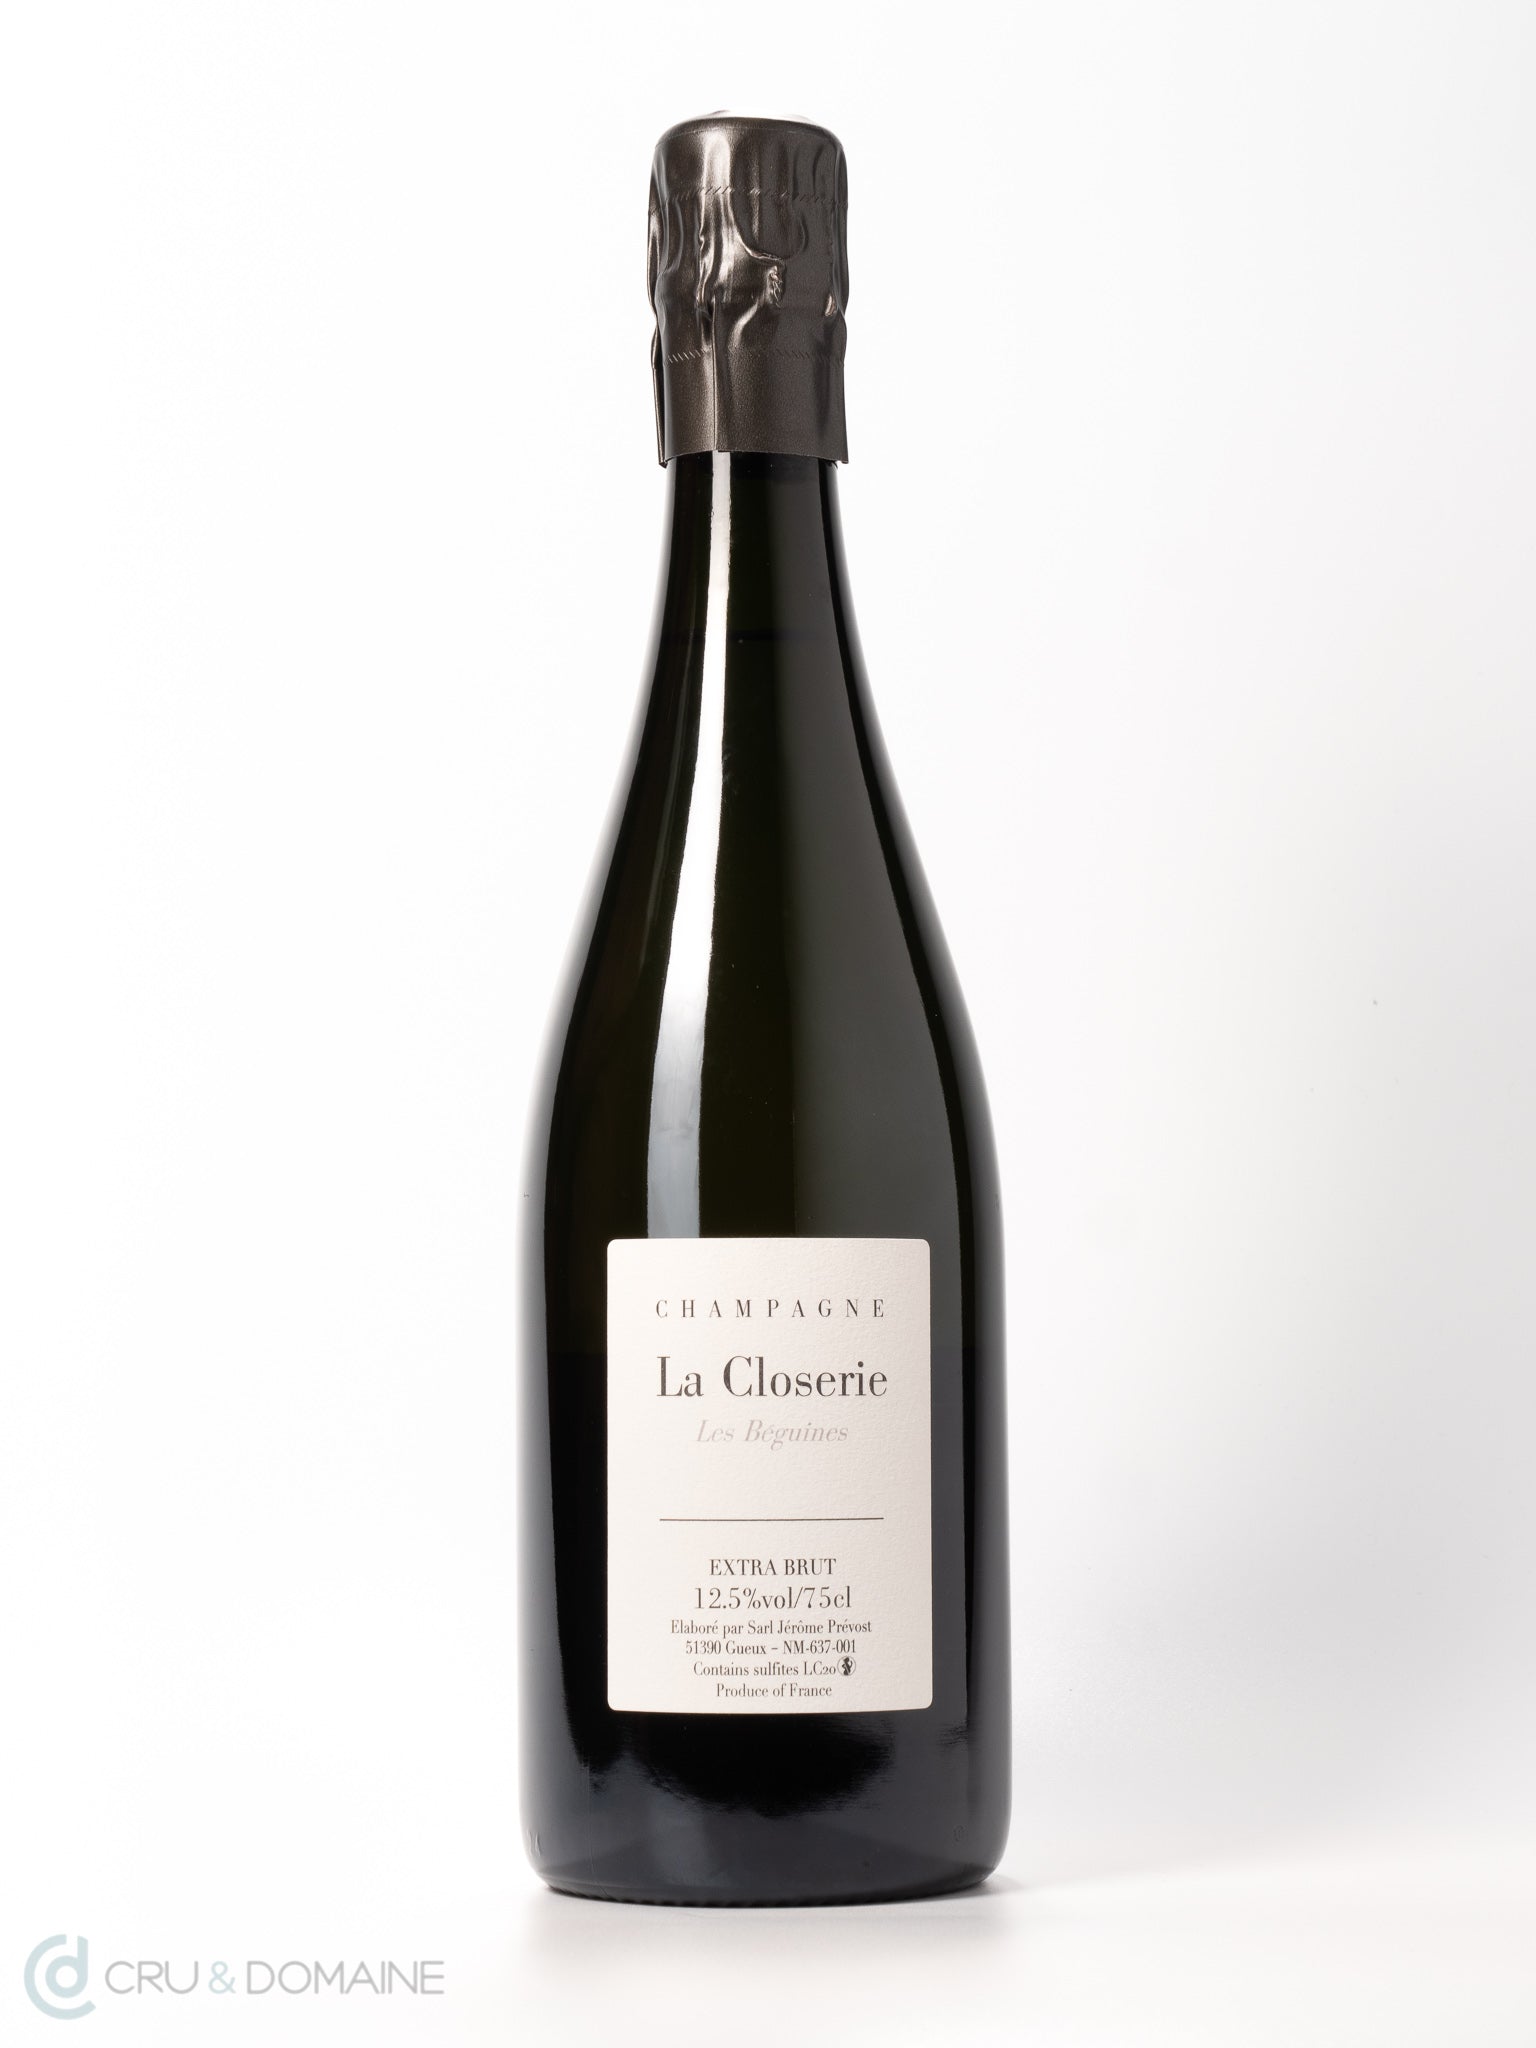 NV (2020) Jerome Prevost (La Closerie), 'Les Beguines', Extra Brut,  Champagne, France